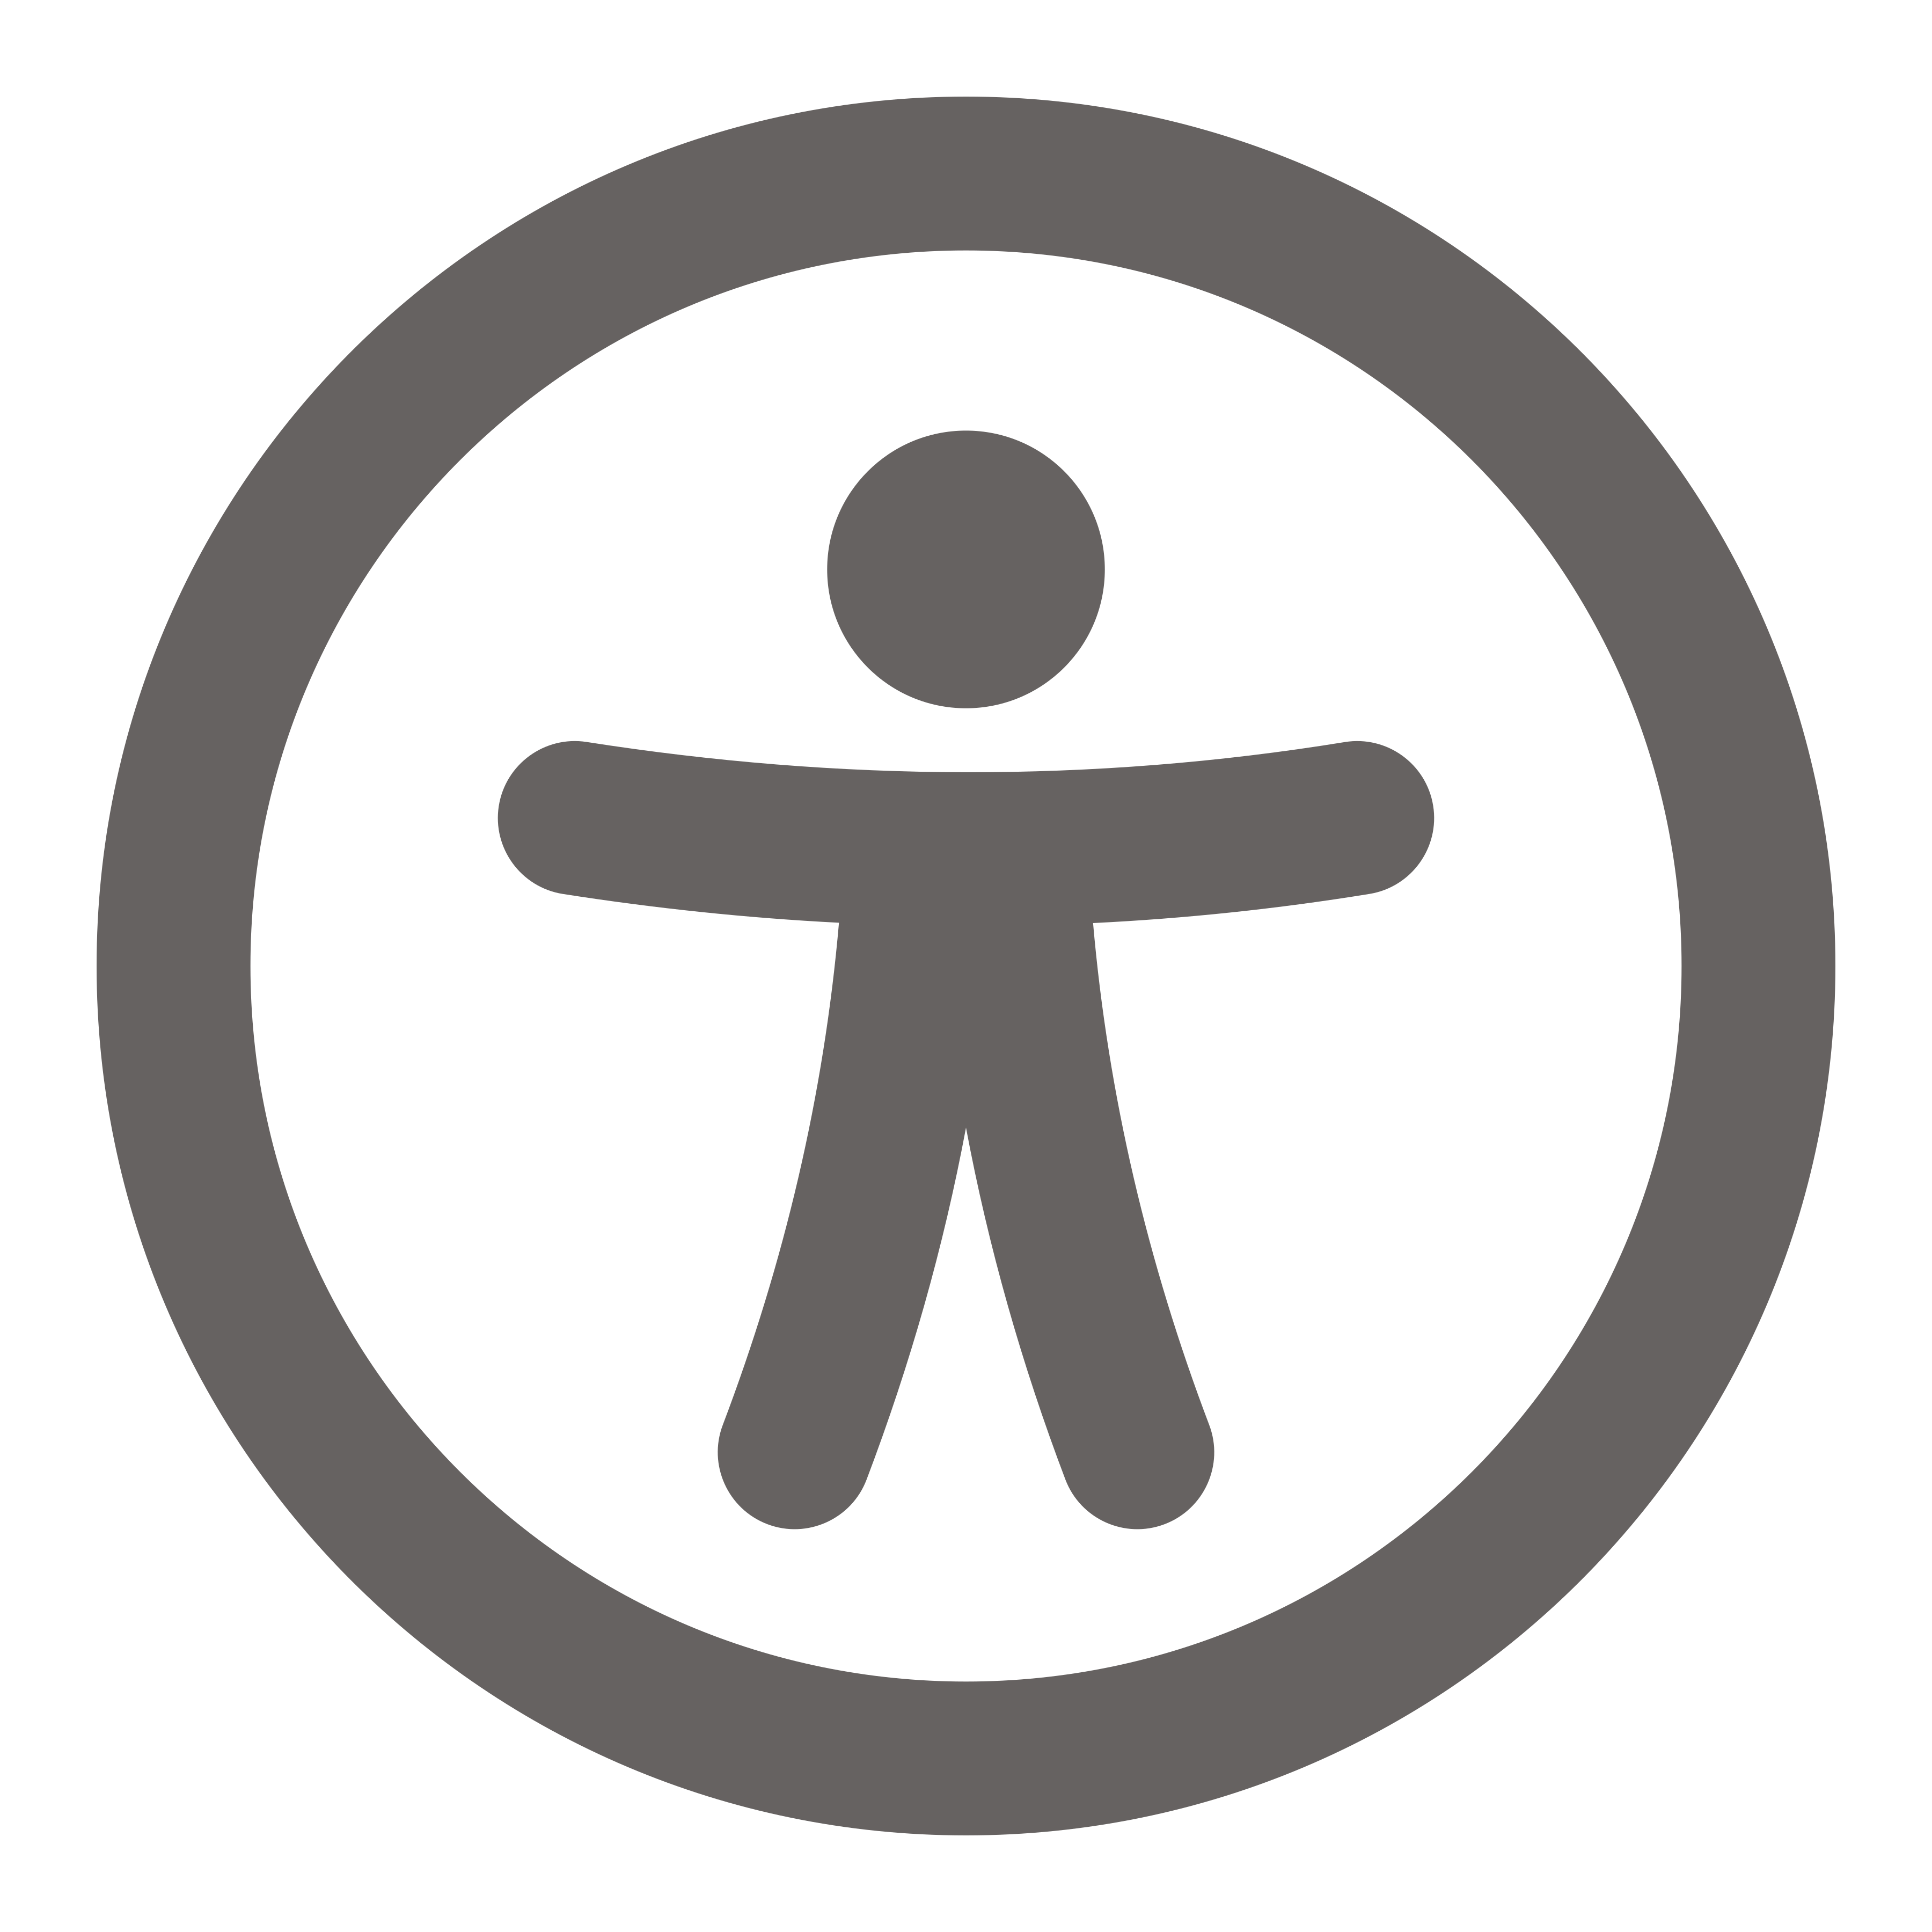 gray accessibility icon